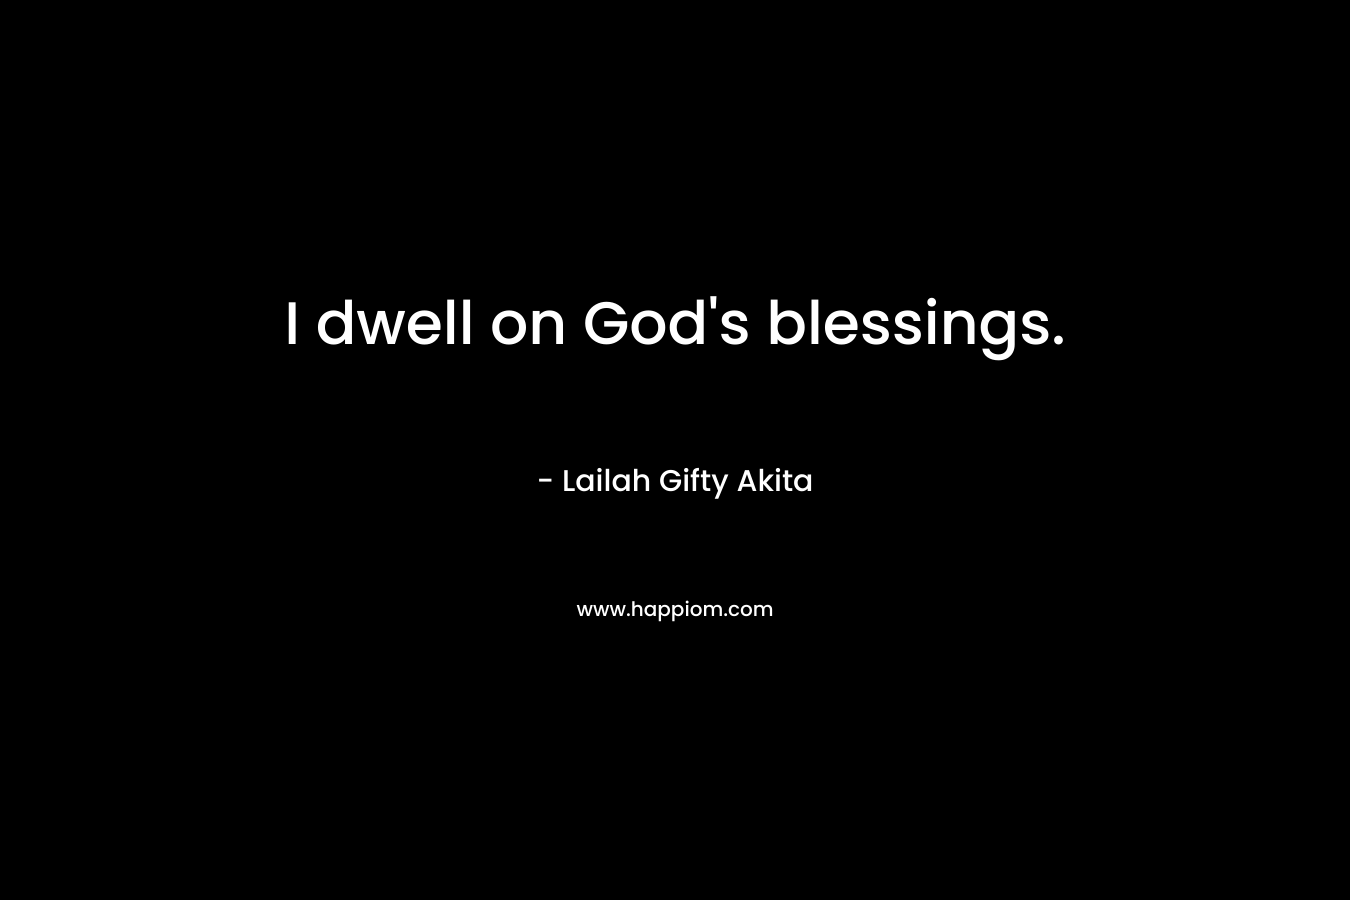 I dwell on God's blessings.